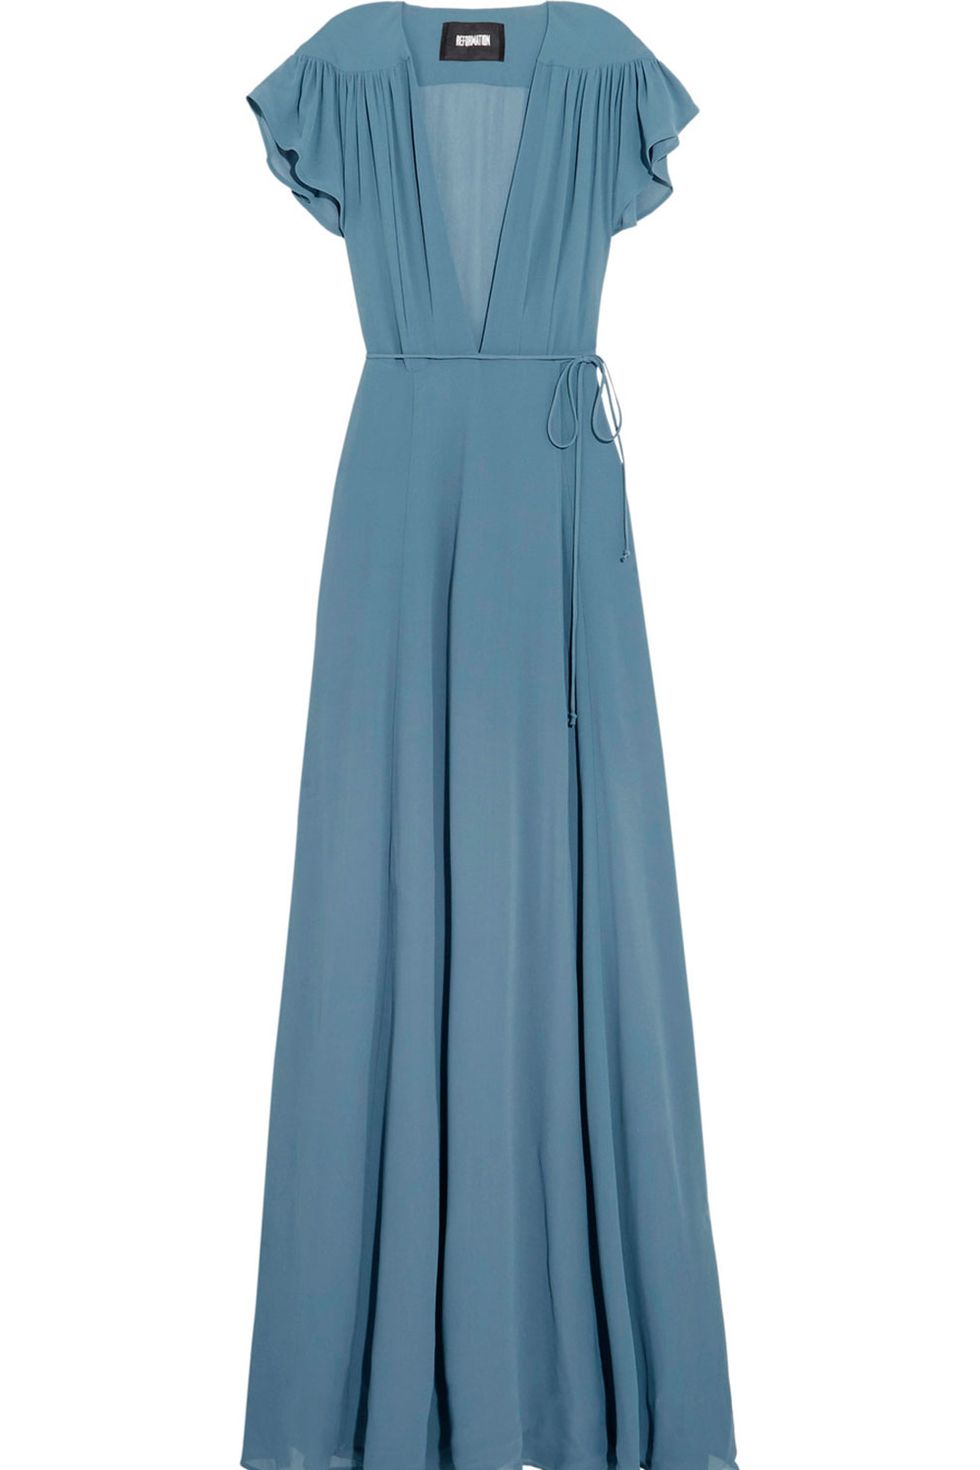 Blue, Sleeve, Dress, One-piece garment, Formal wear, Aqua, Teal, Electric blue, Azure, Day dress, 